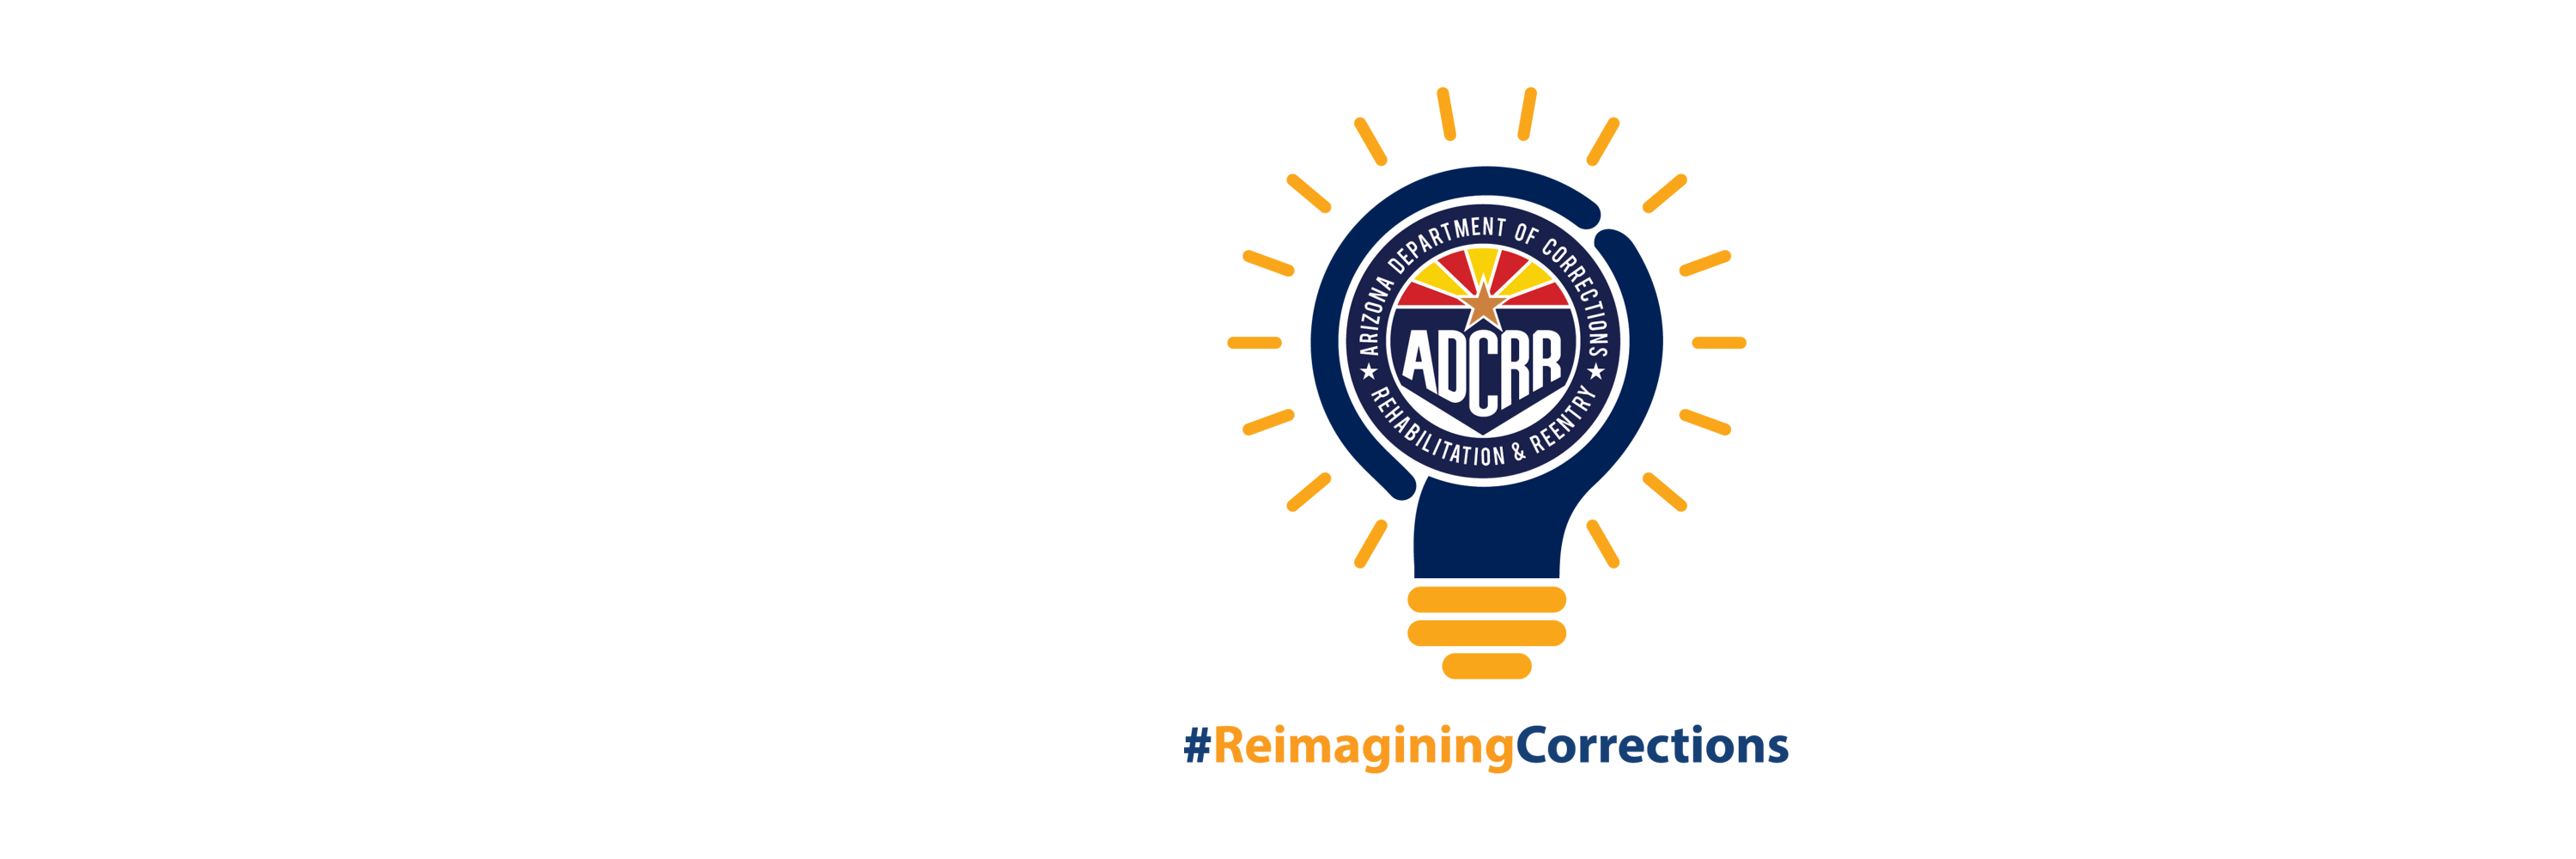 Reimagining Corrections logo